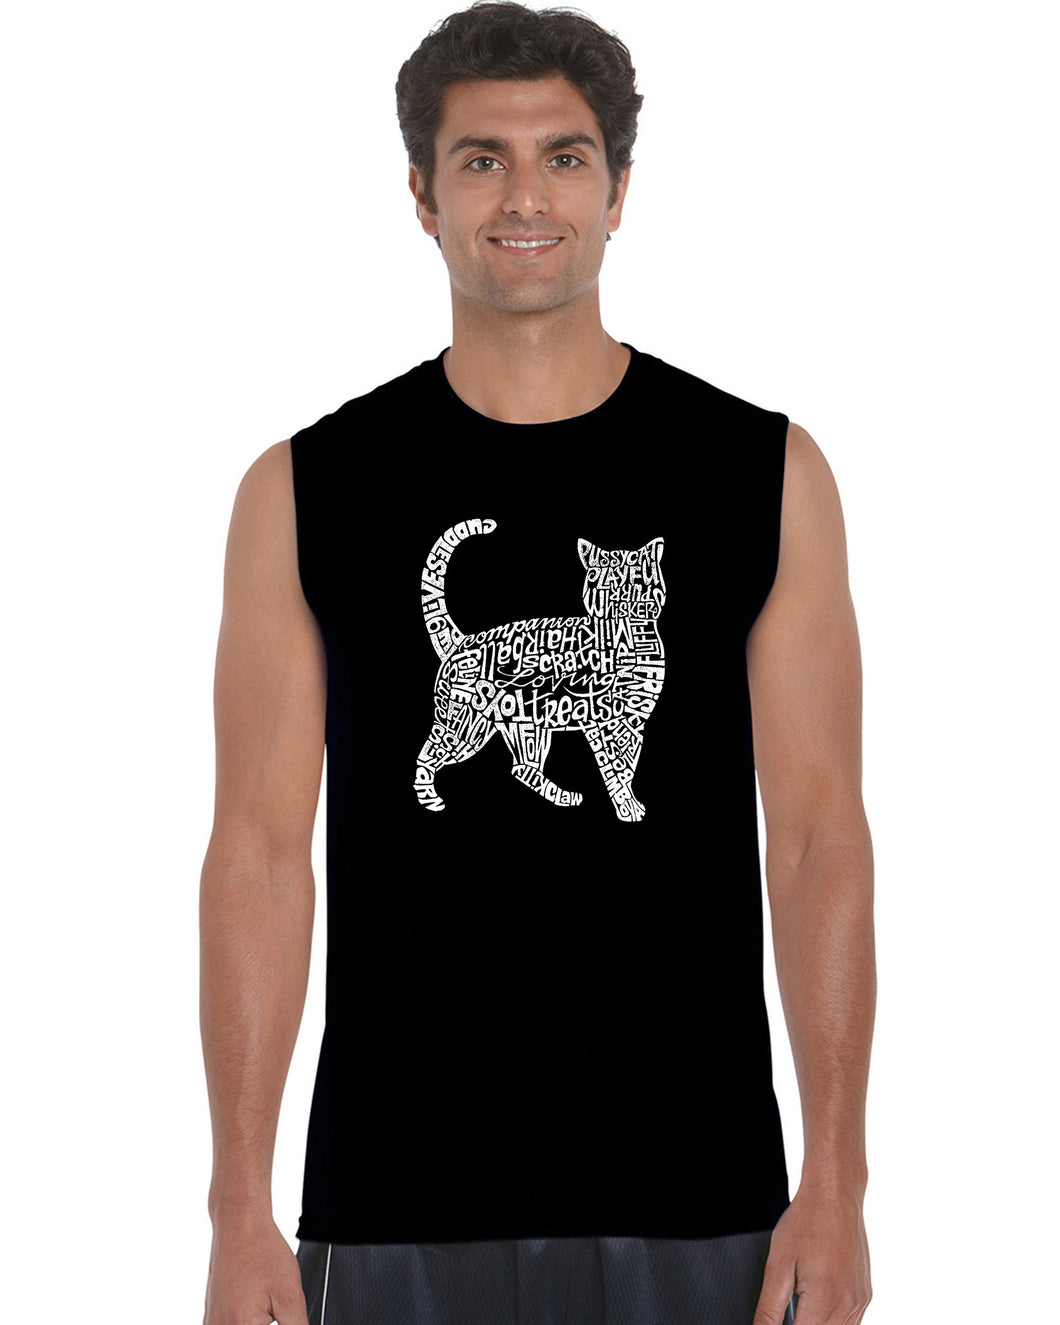 Cat - Men's Word Art Sleeveless T-Shirt